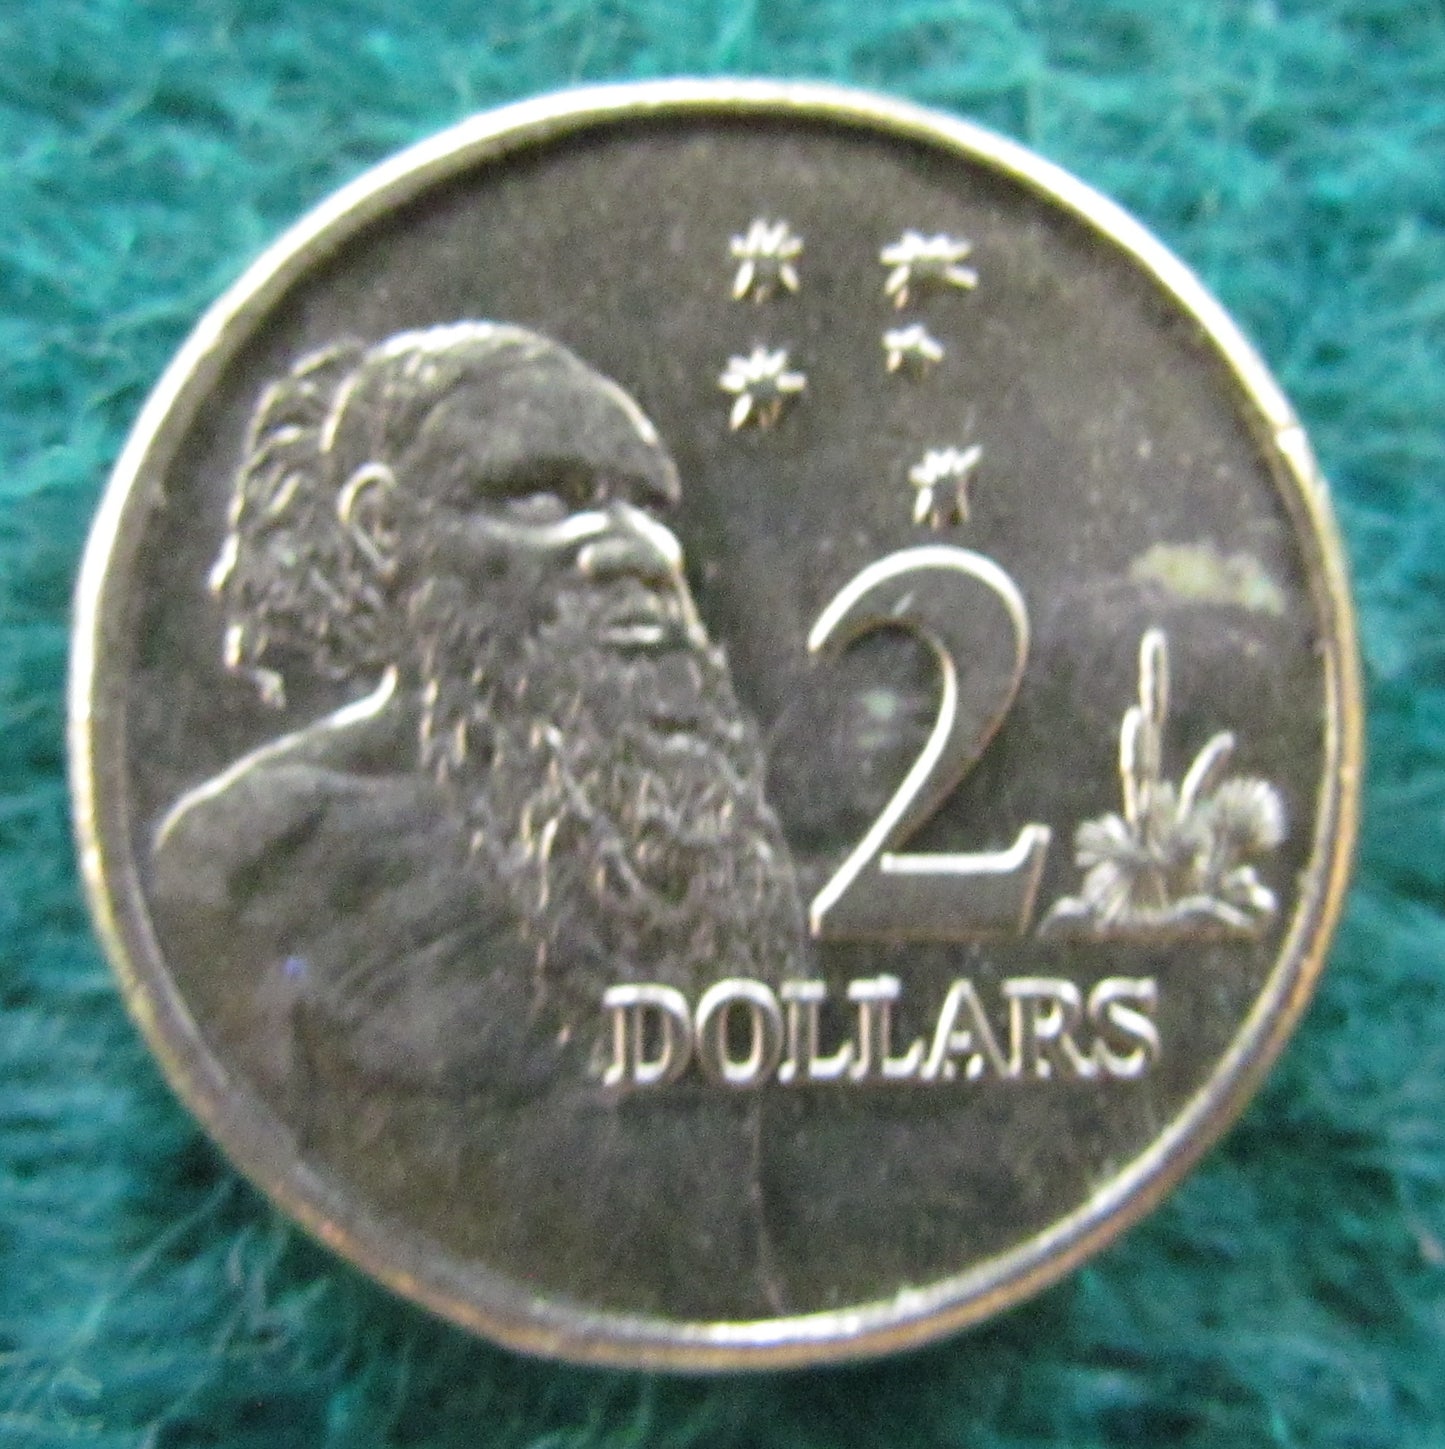 Australian 2015 2 Dollar Aboriginal Elder Queen Elizabeth Coin - Circulated